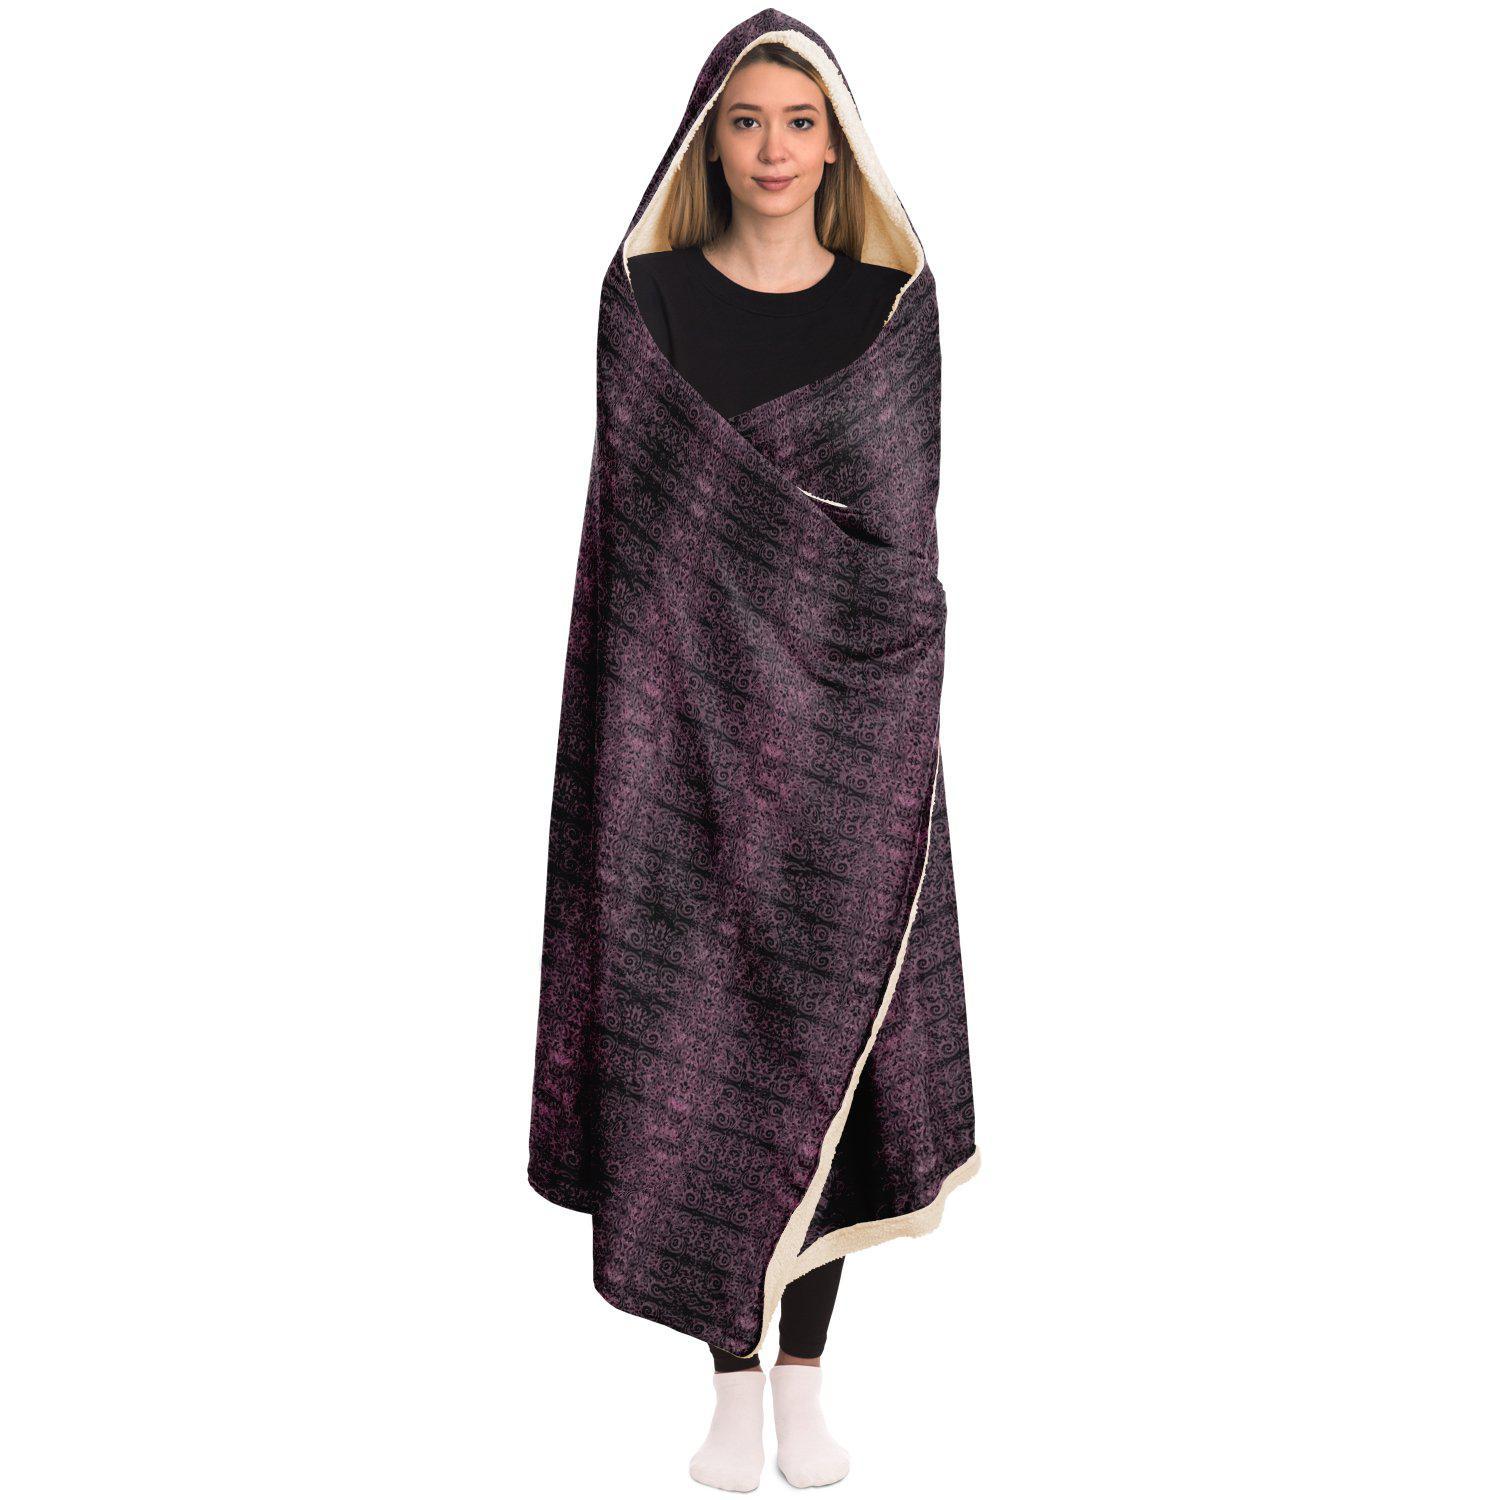 Hooded Blanket - AOP Byzantine Contemporary Hooded Blanket